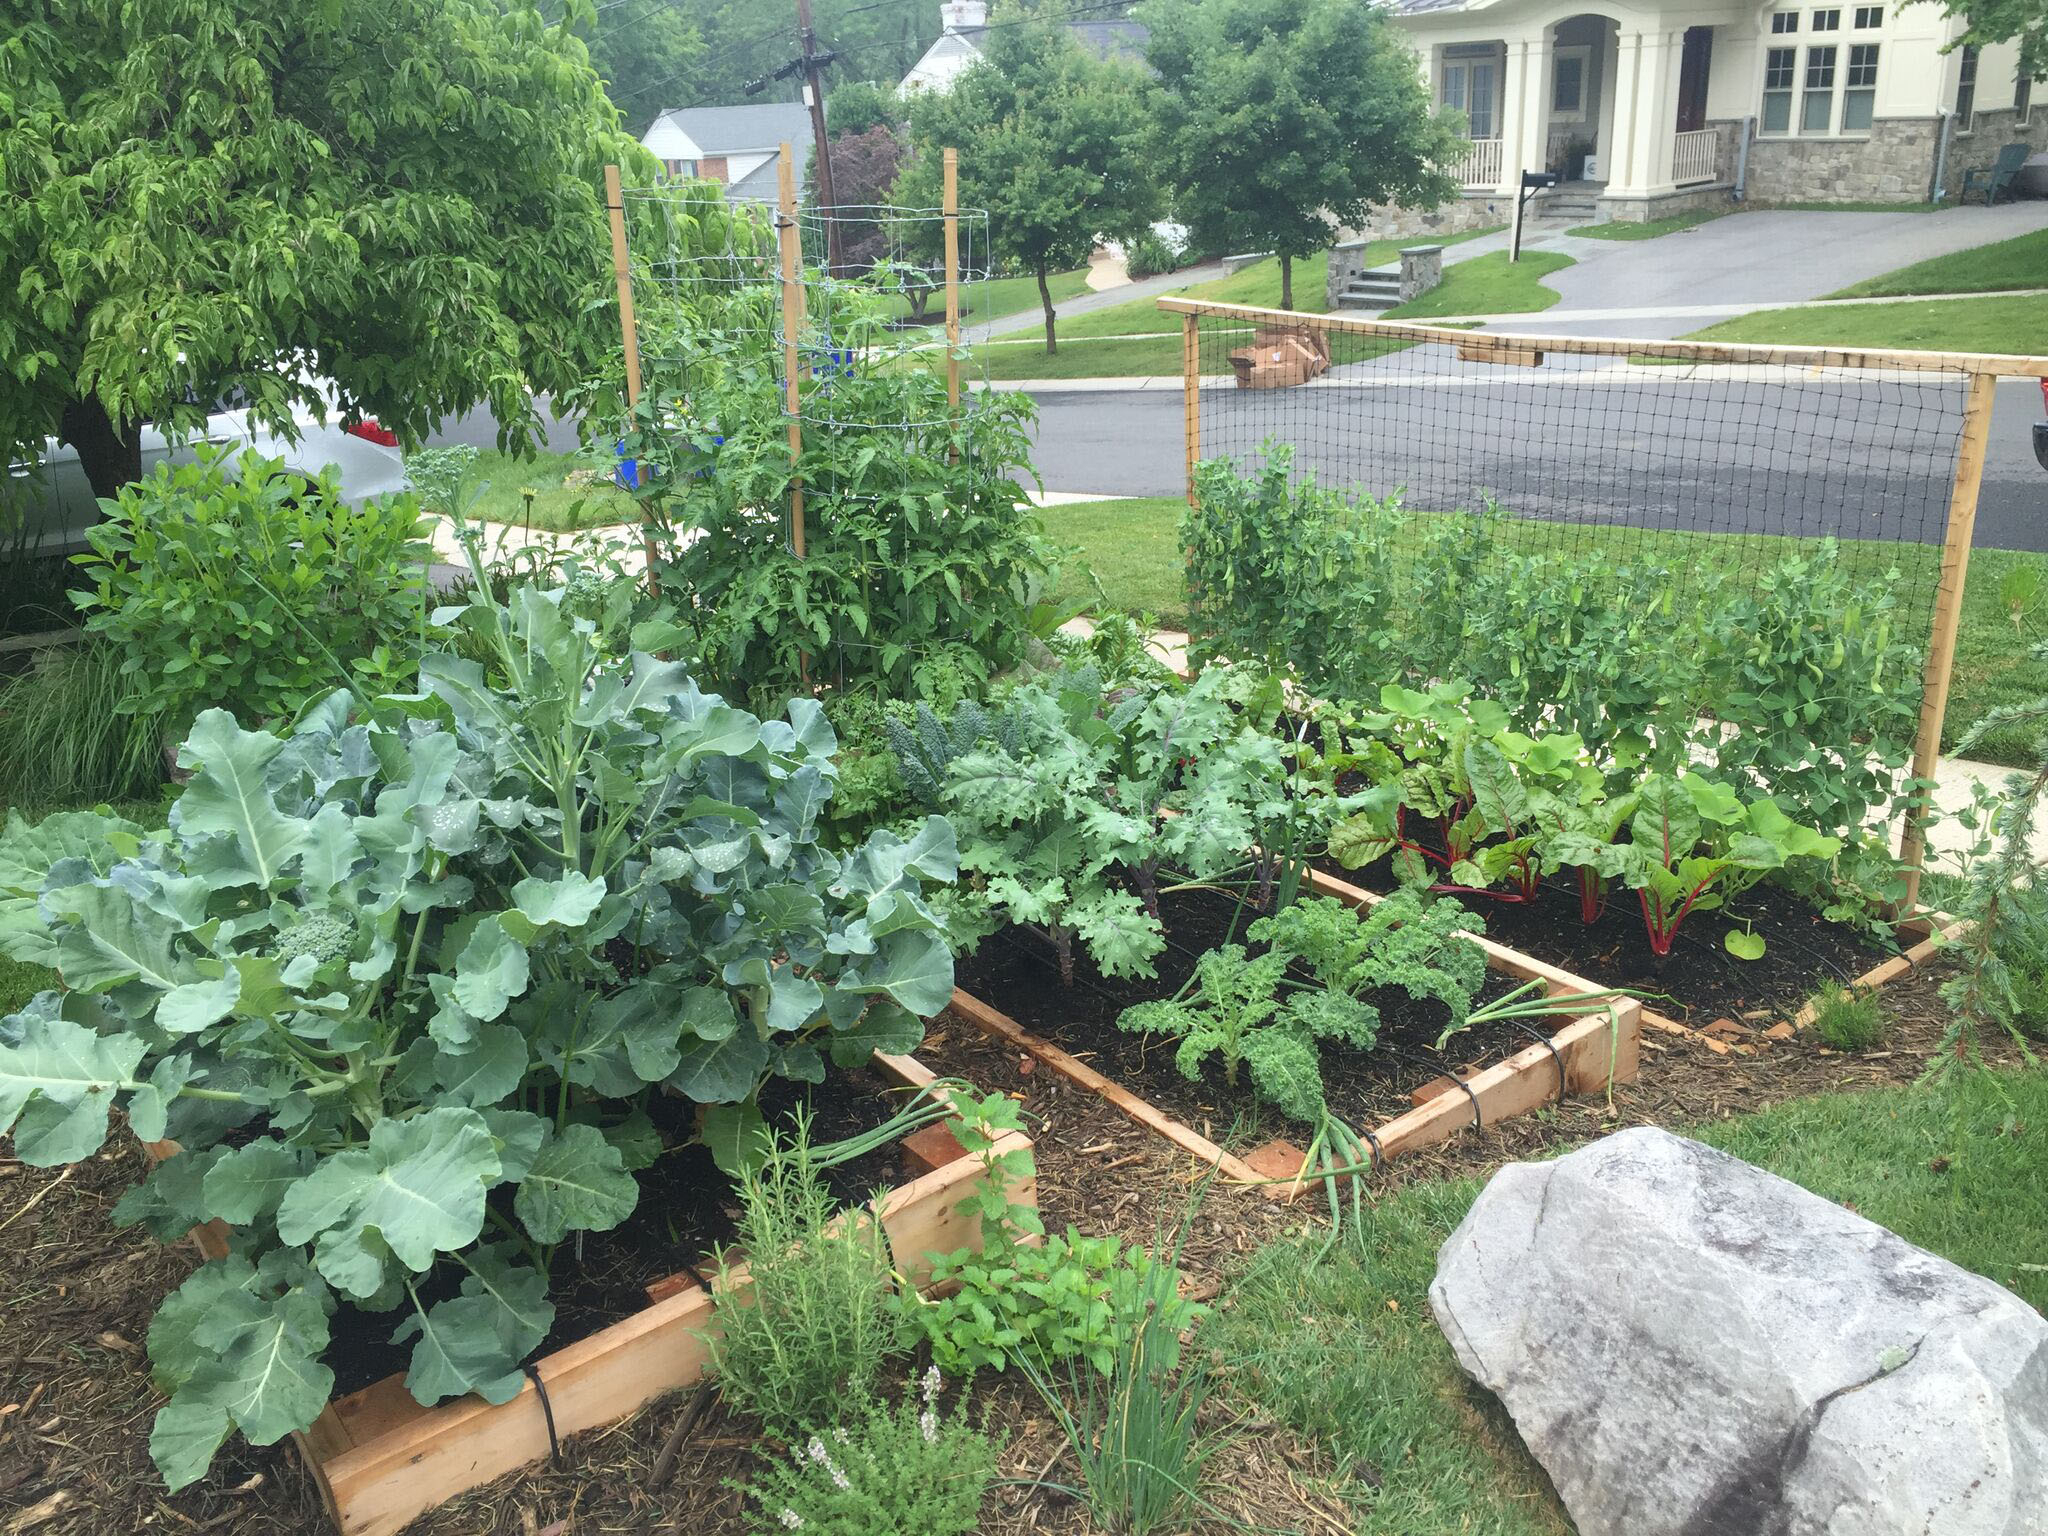 Vegetable Gardening Ideas